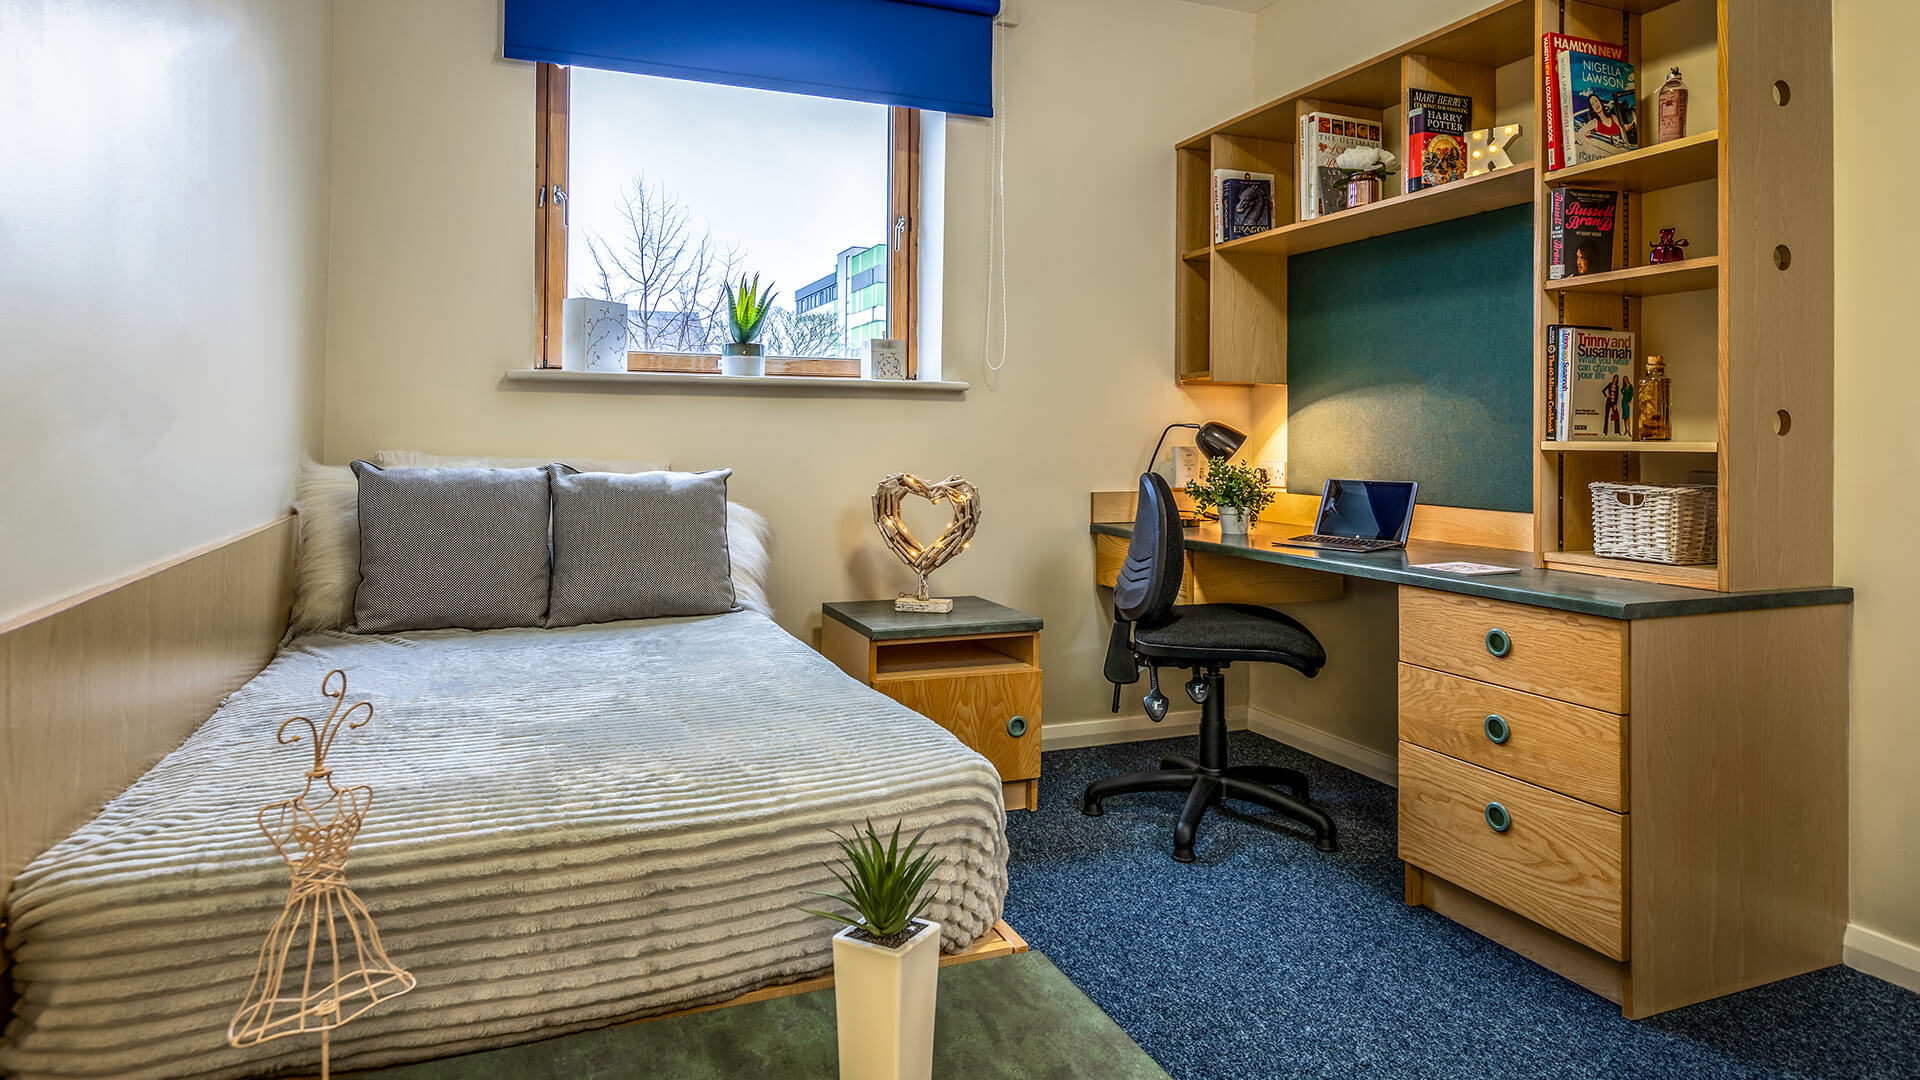 Student accommodation at De Montfort University